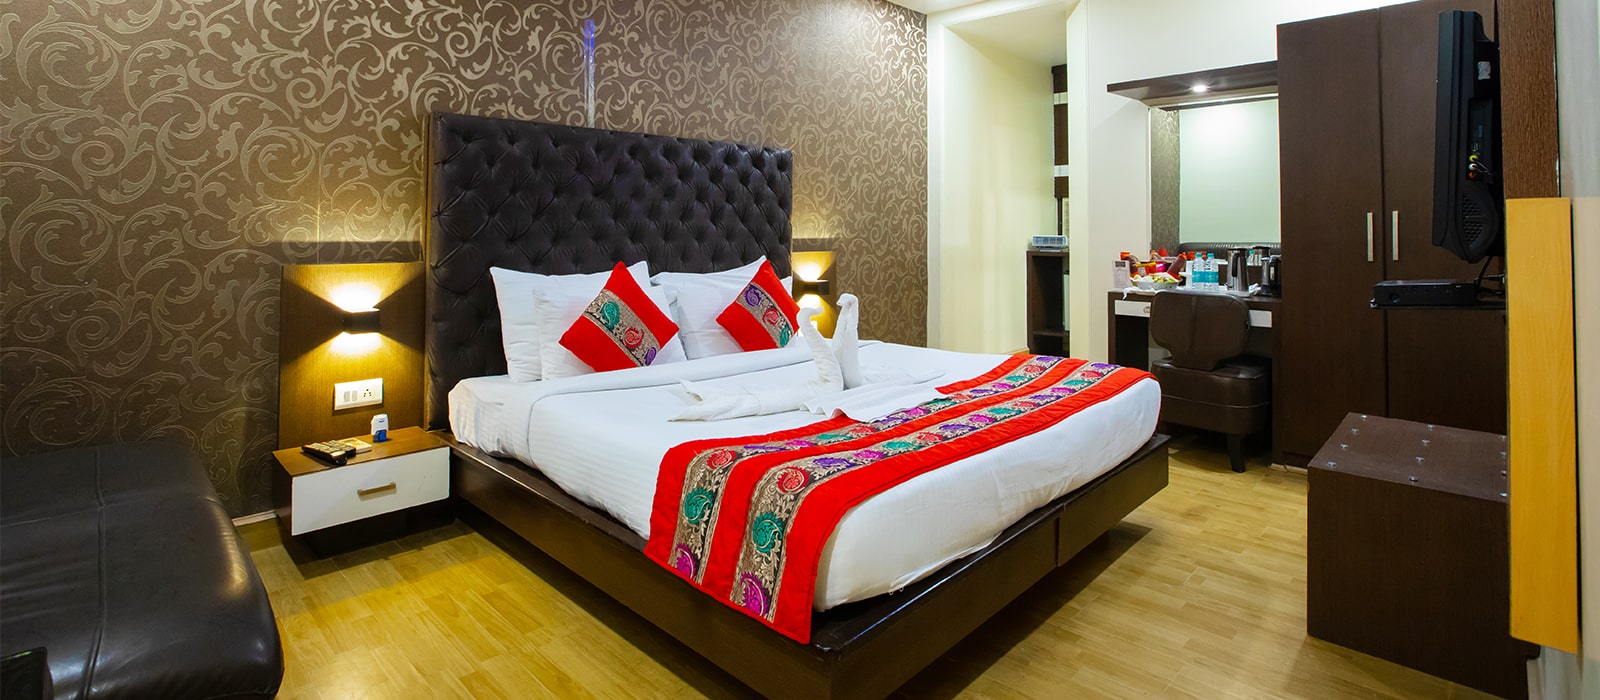 Best Accommodation in Karol Bagh Delhi - Rooms